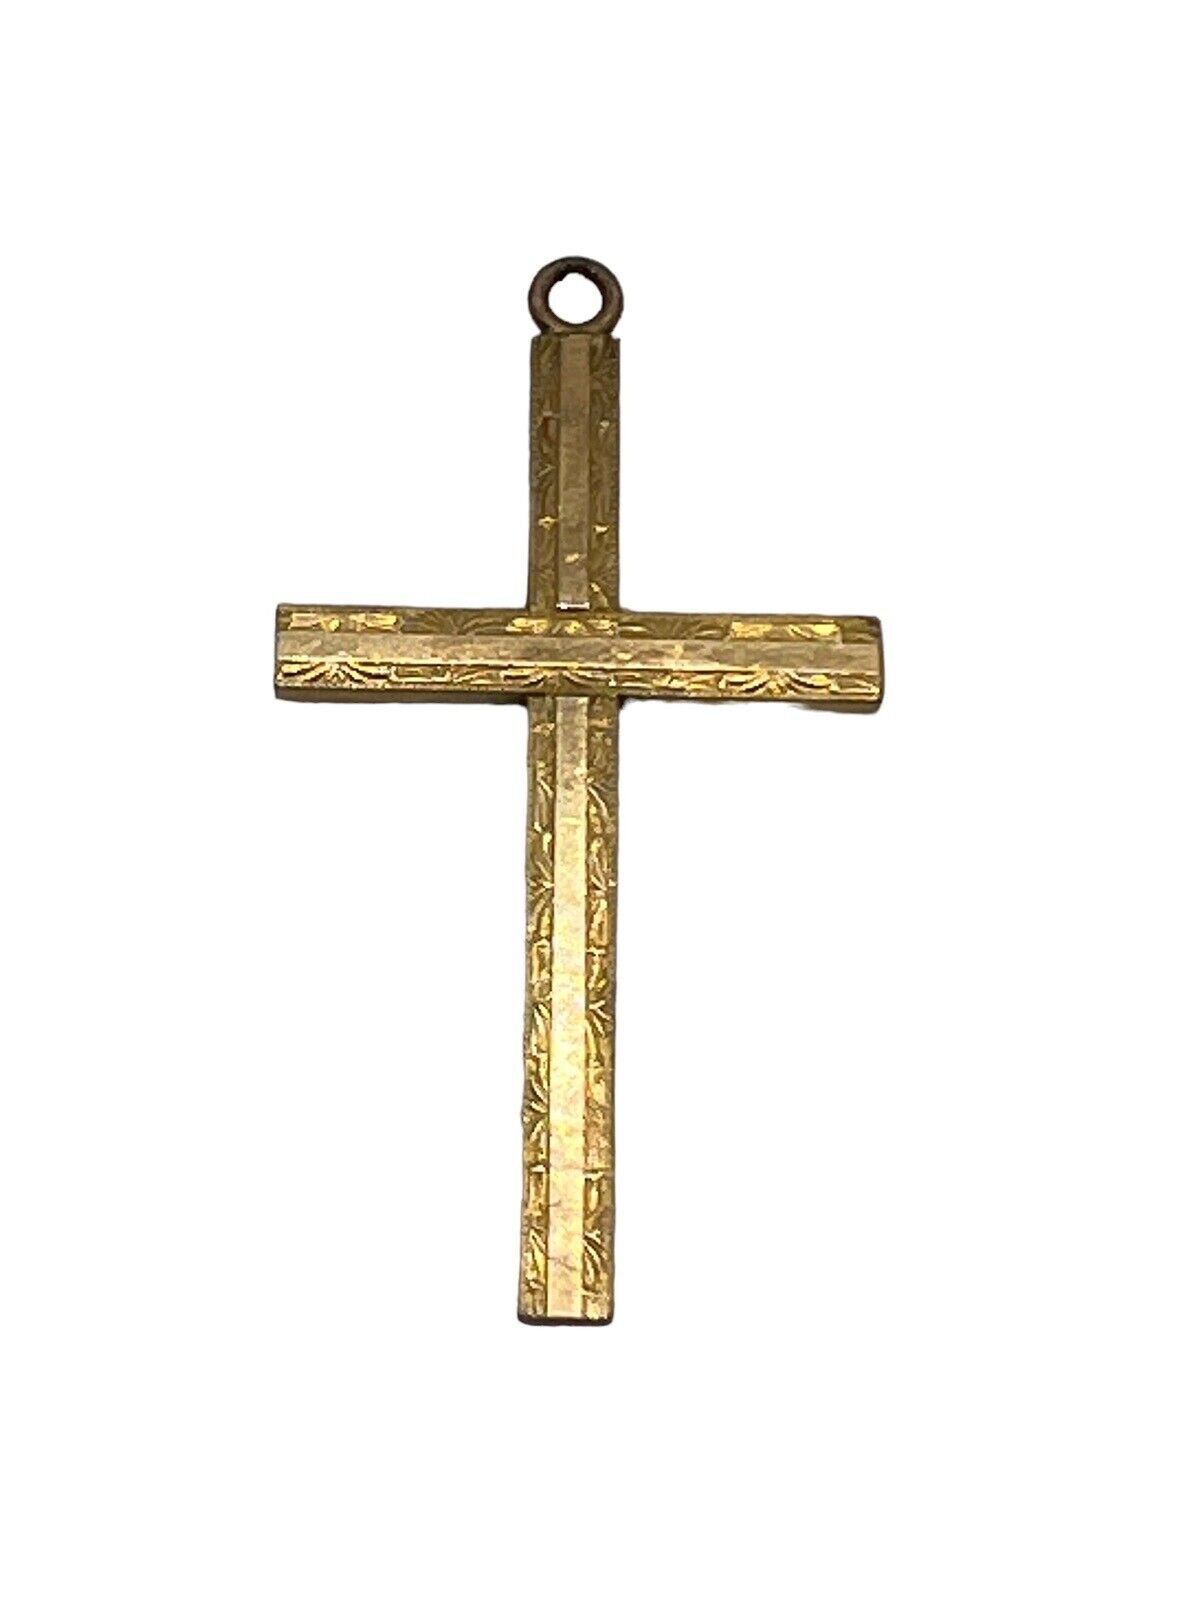 Vintage Cross Etched Gold Tone Christian Religious Spirituality